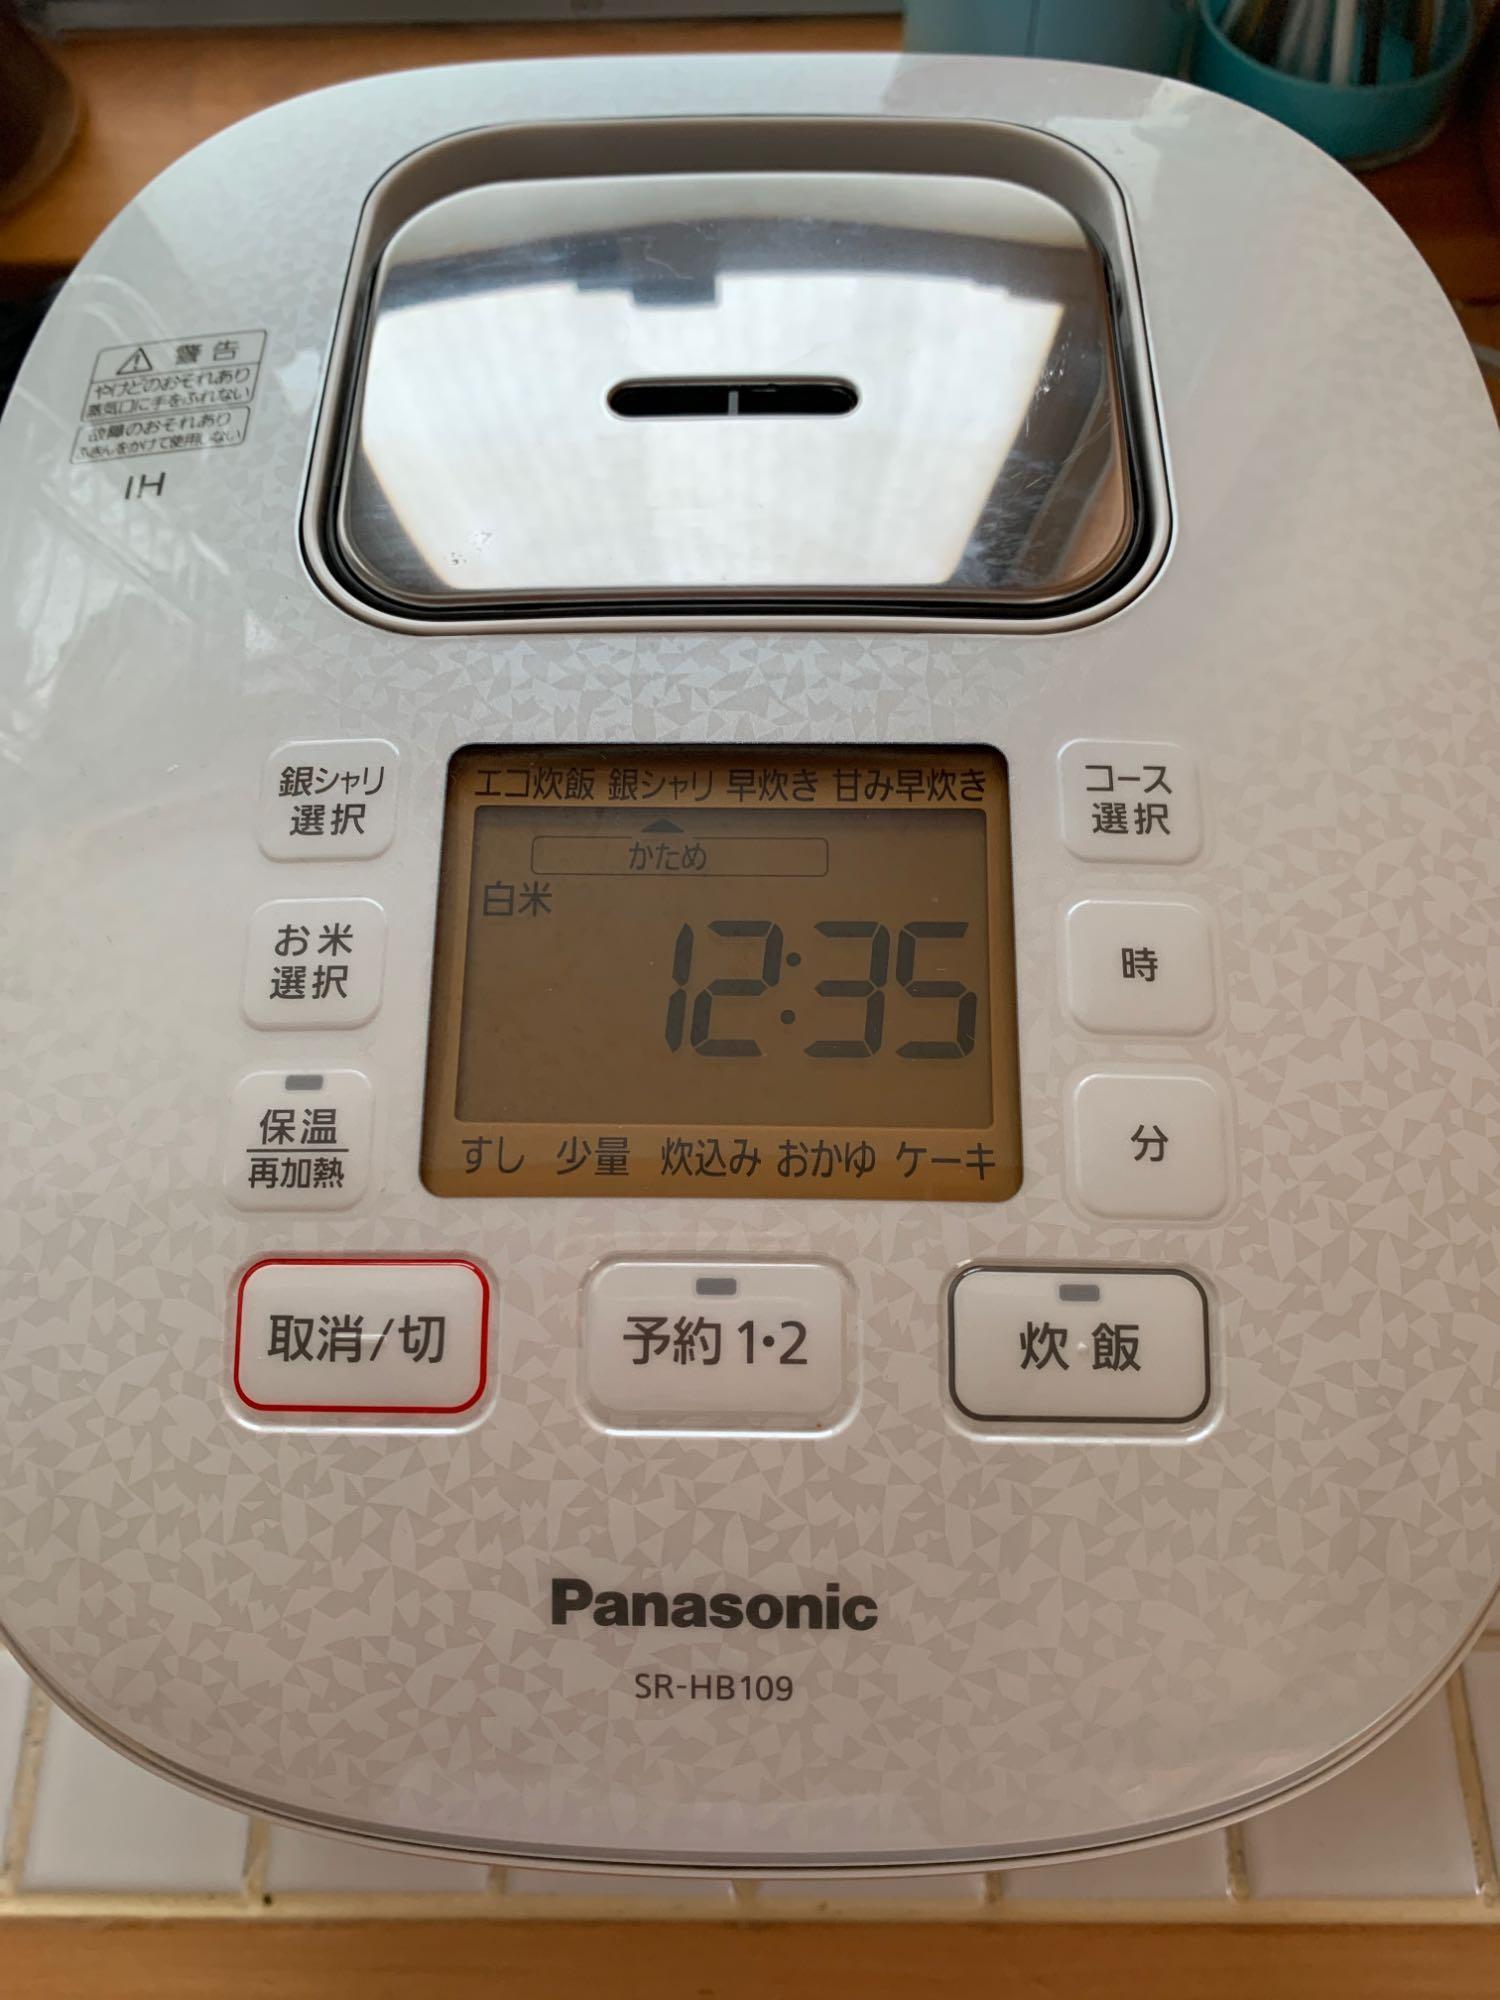 Panasonic IHジャー炊飯器 SR-HB109-W （ホワイト） 炊飯器本体